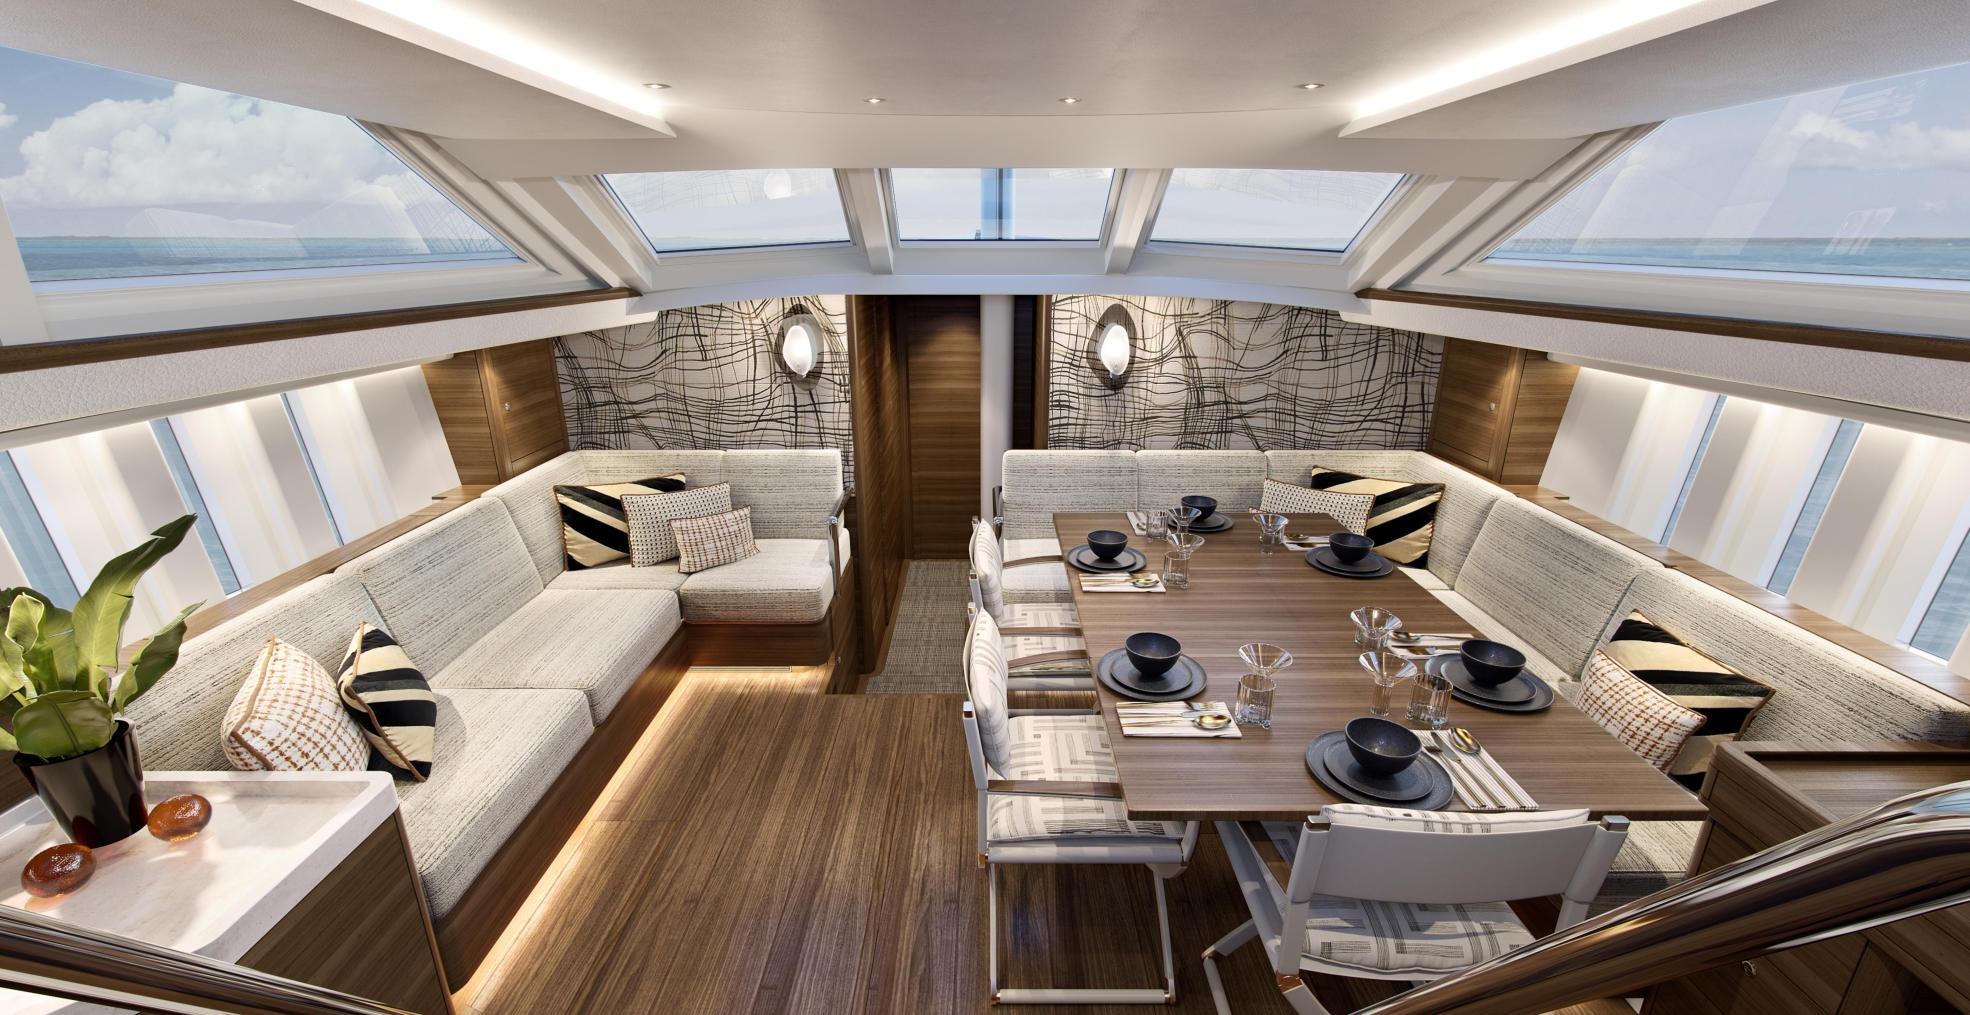 walnut interior on 70 foot sailing yacht